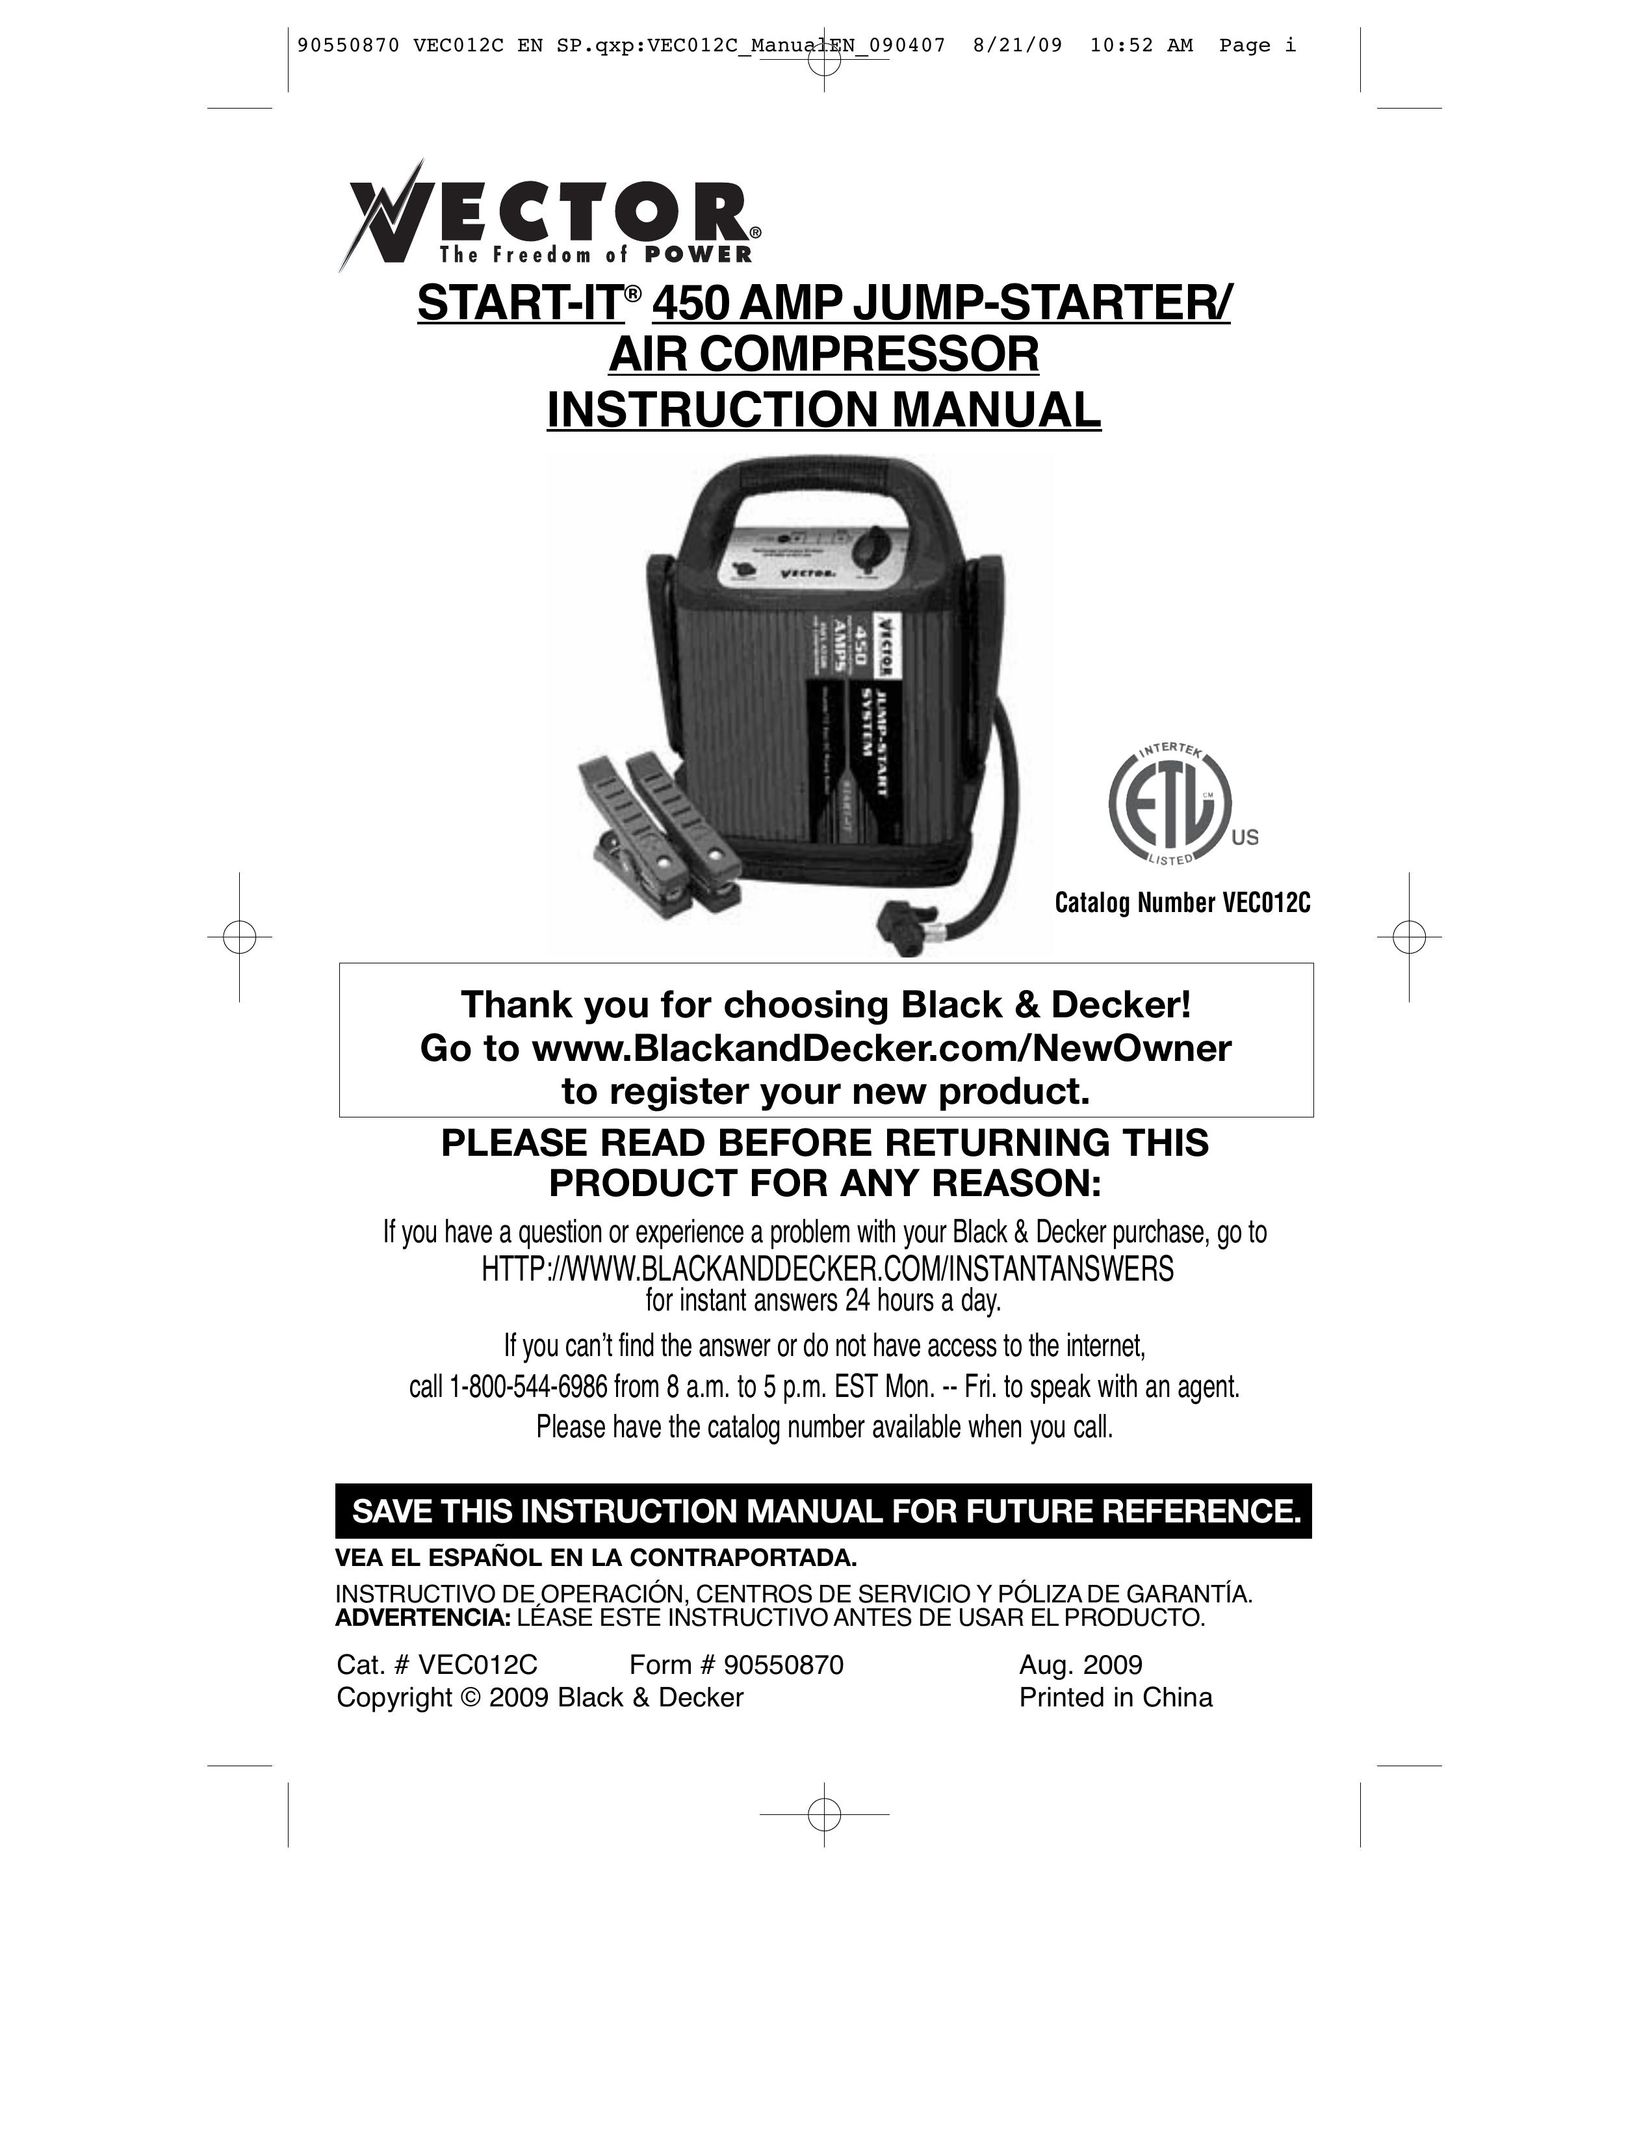 Black & Decker 90550870 Air Compressor User Manual